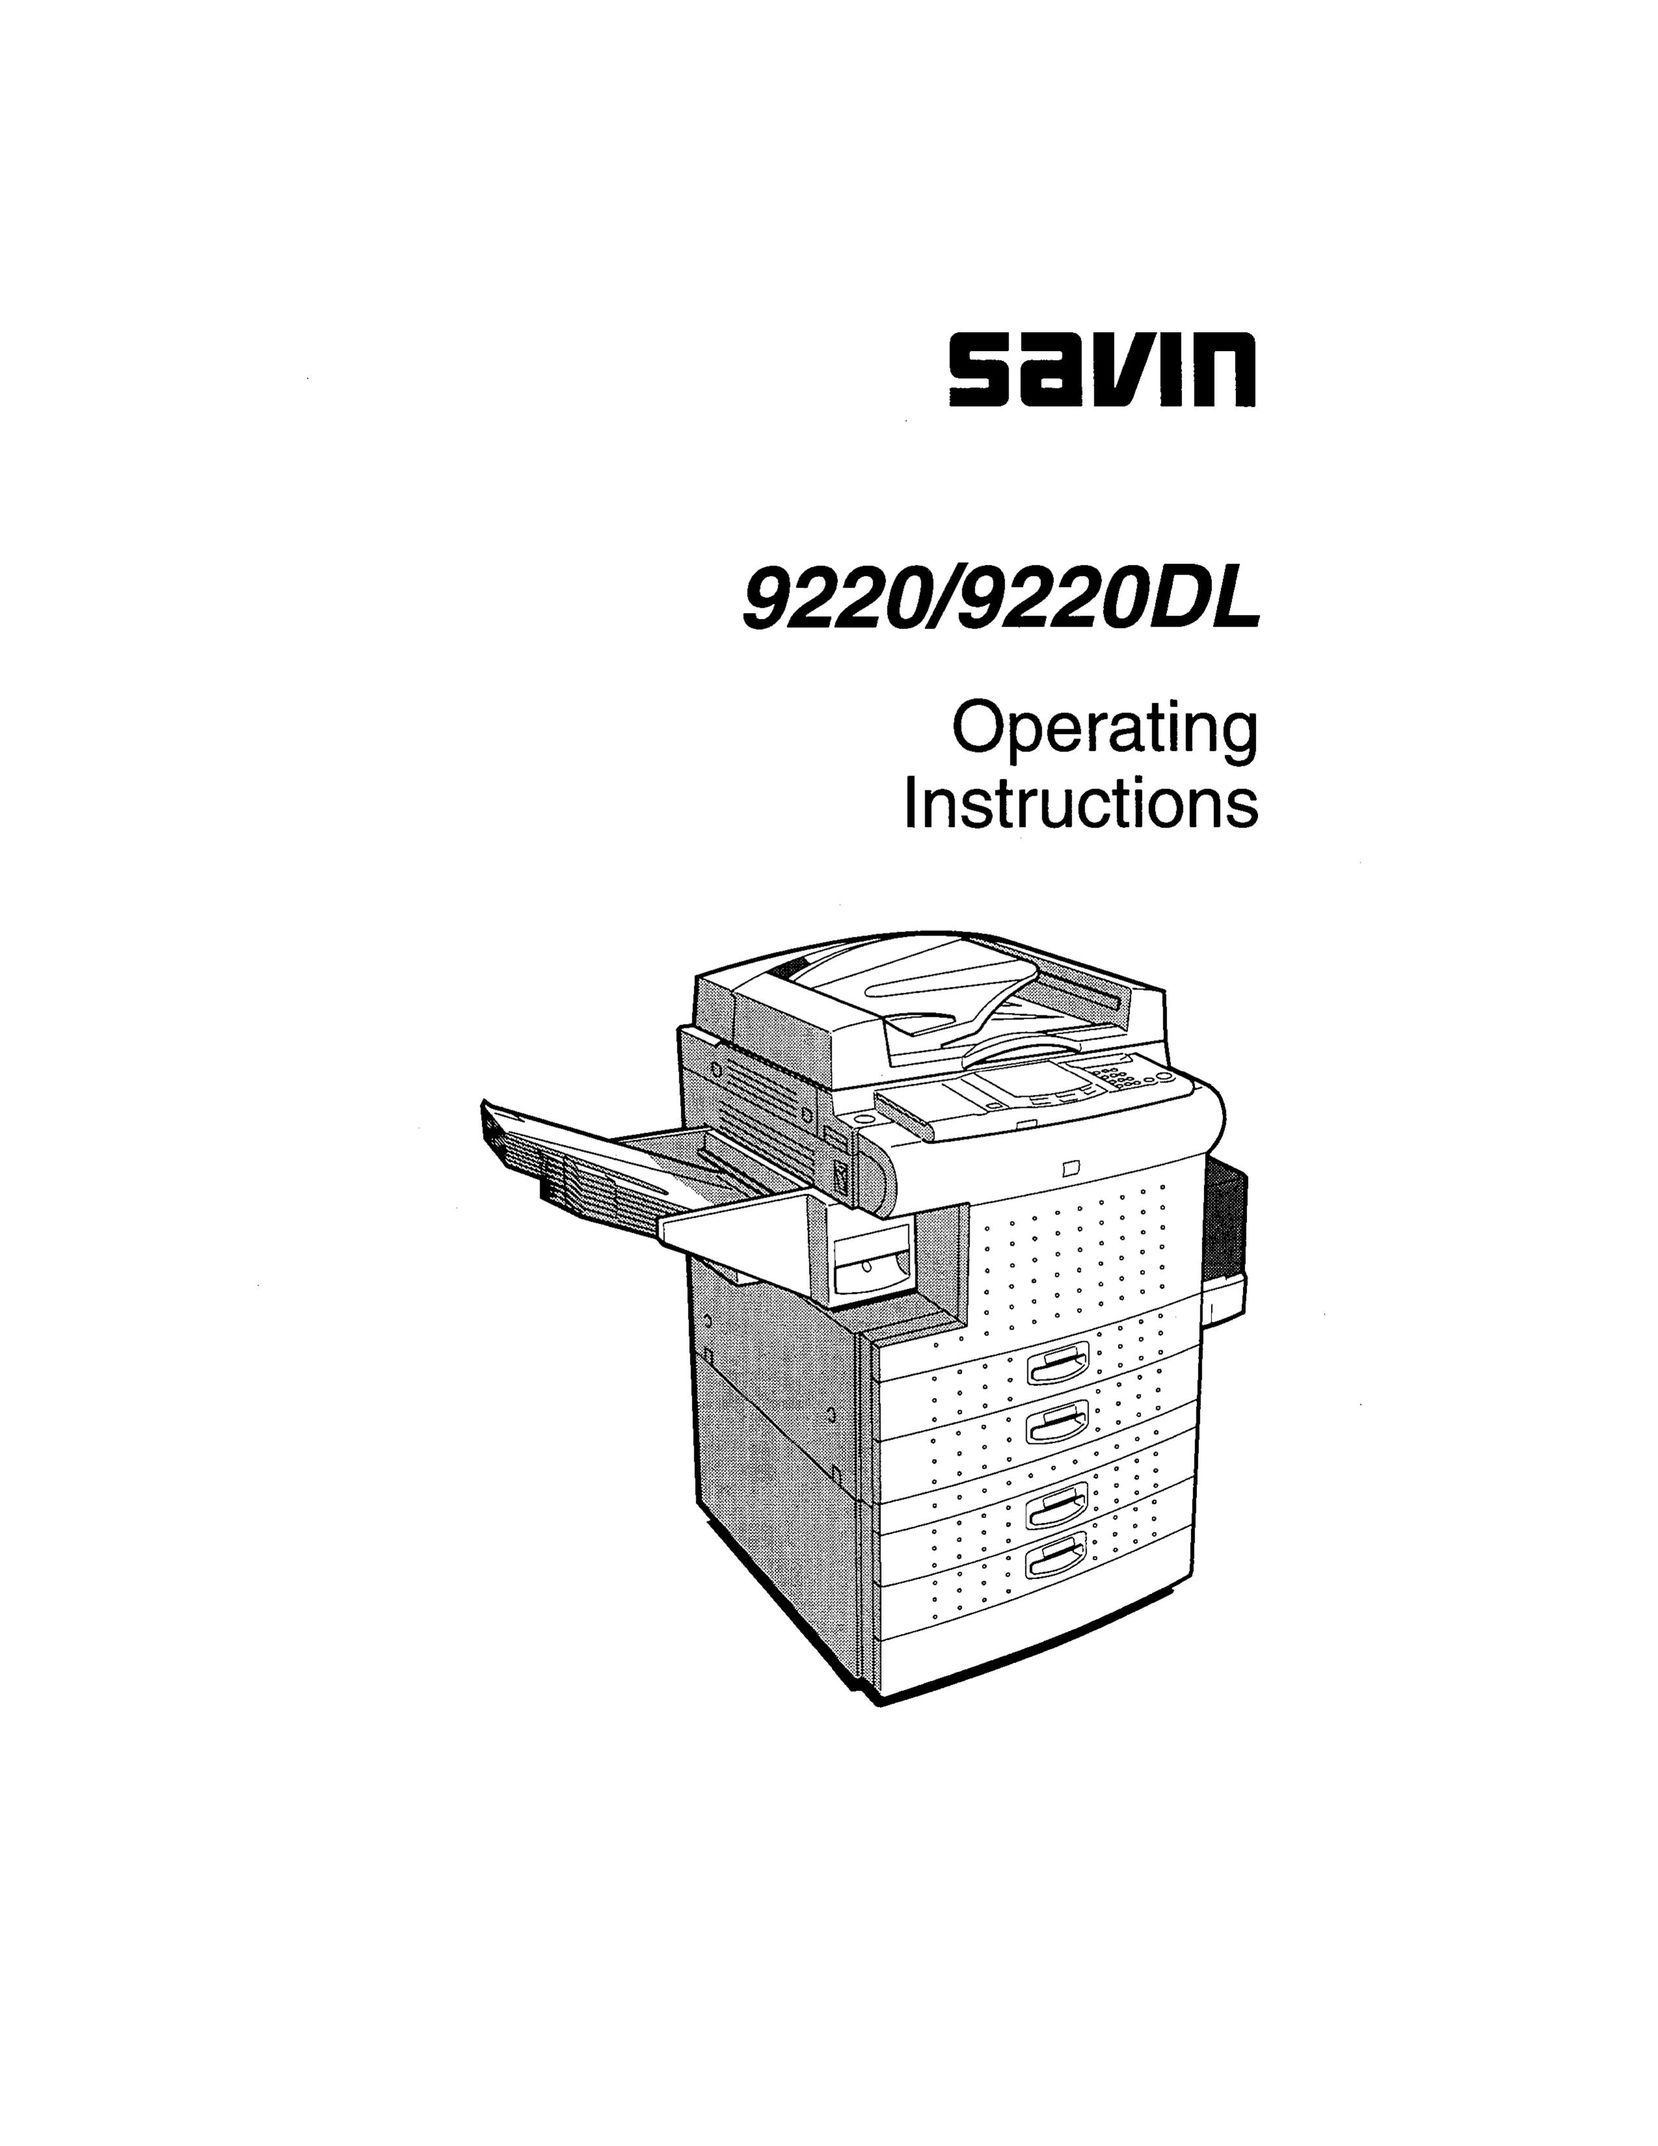 Savin 9220DL All in One Printer User Manual